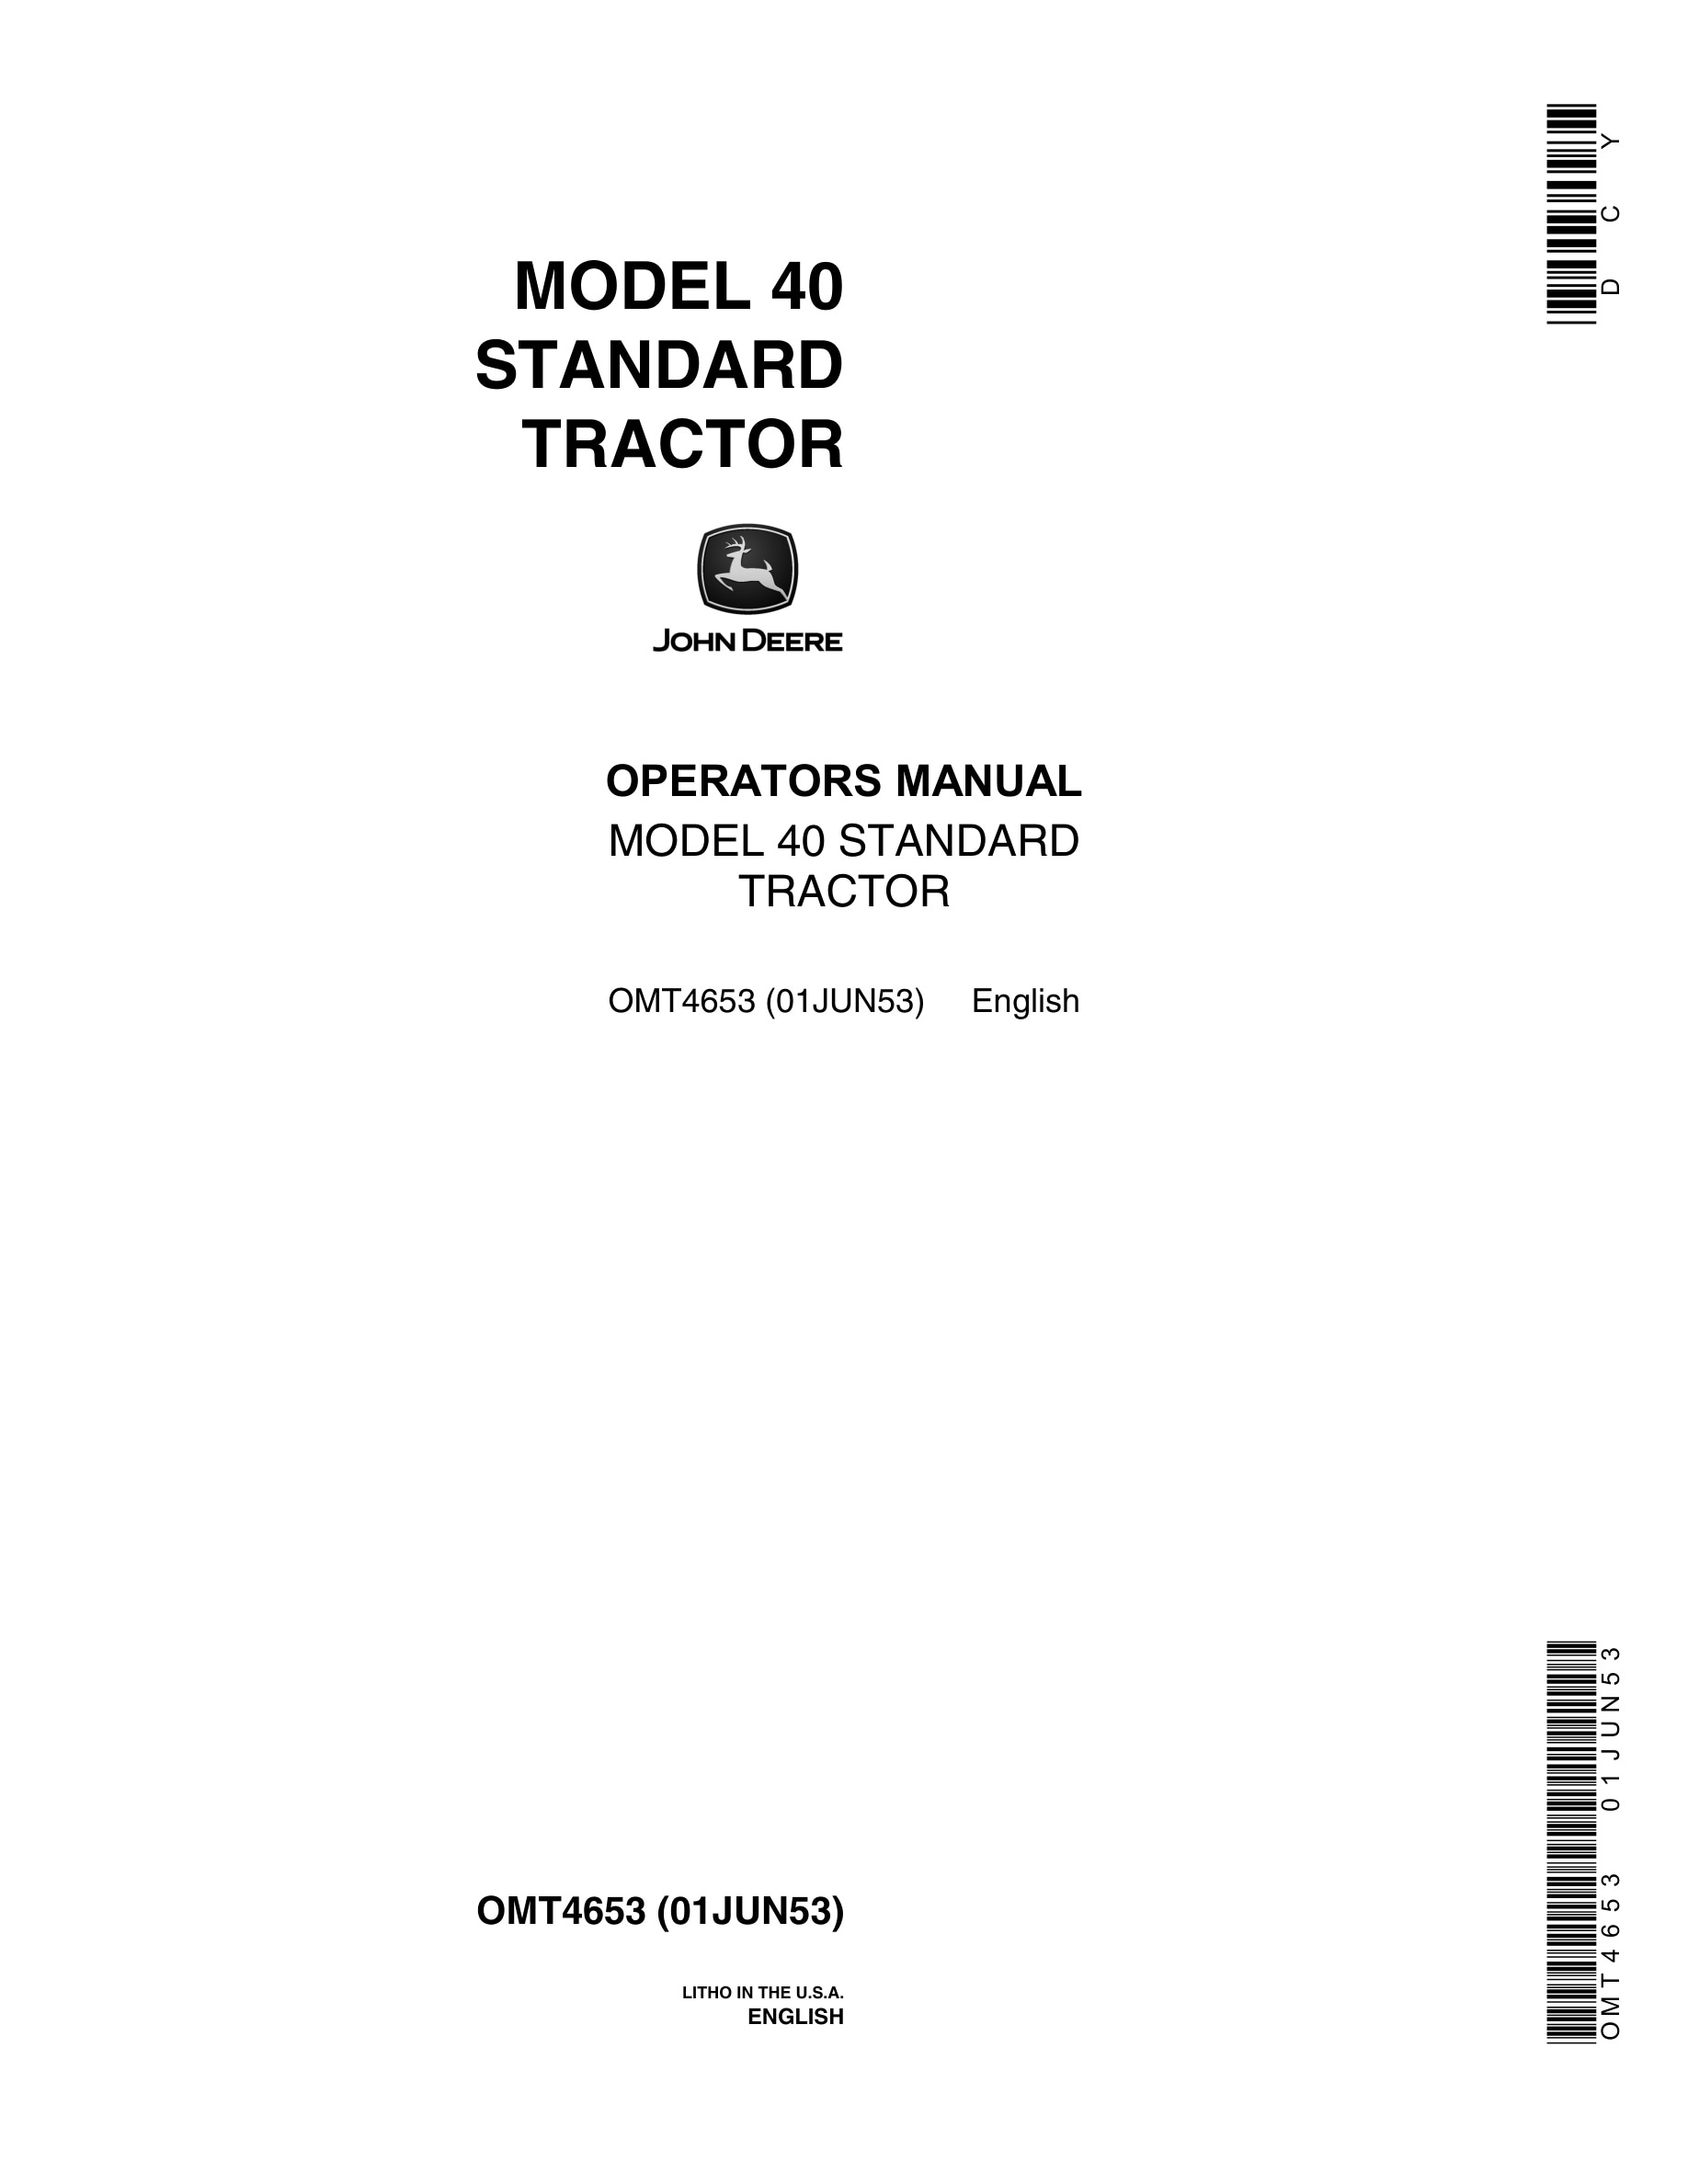 John Deere Model 40 Tractor Operator Manual OMT4653-1